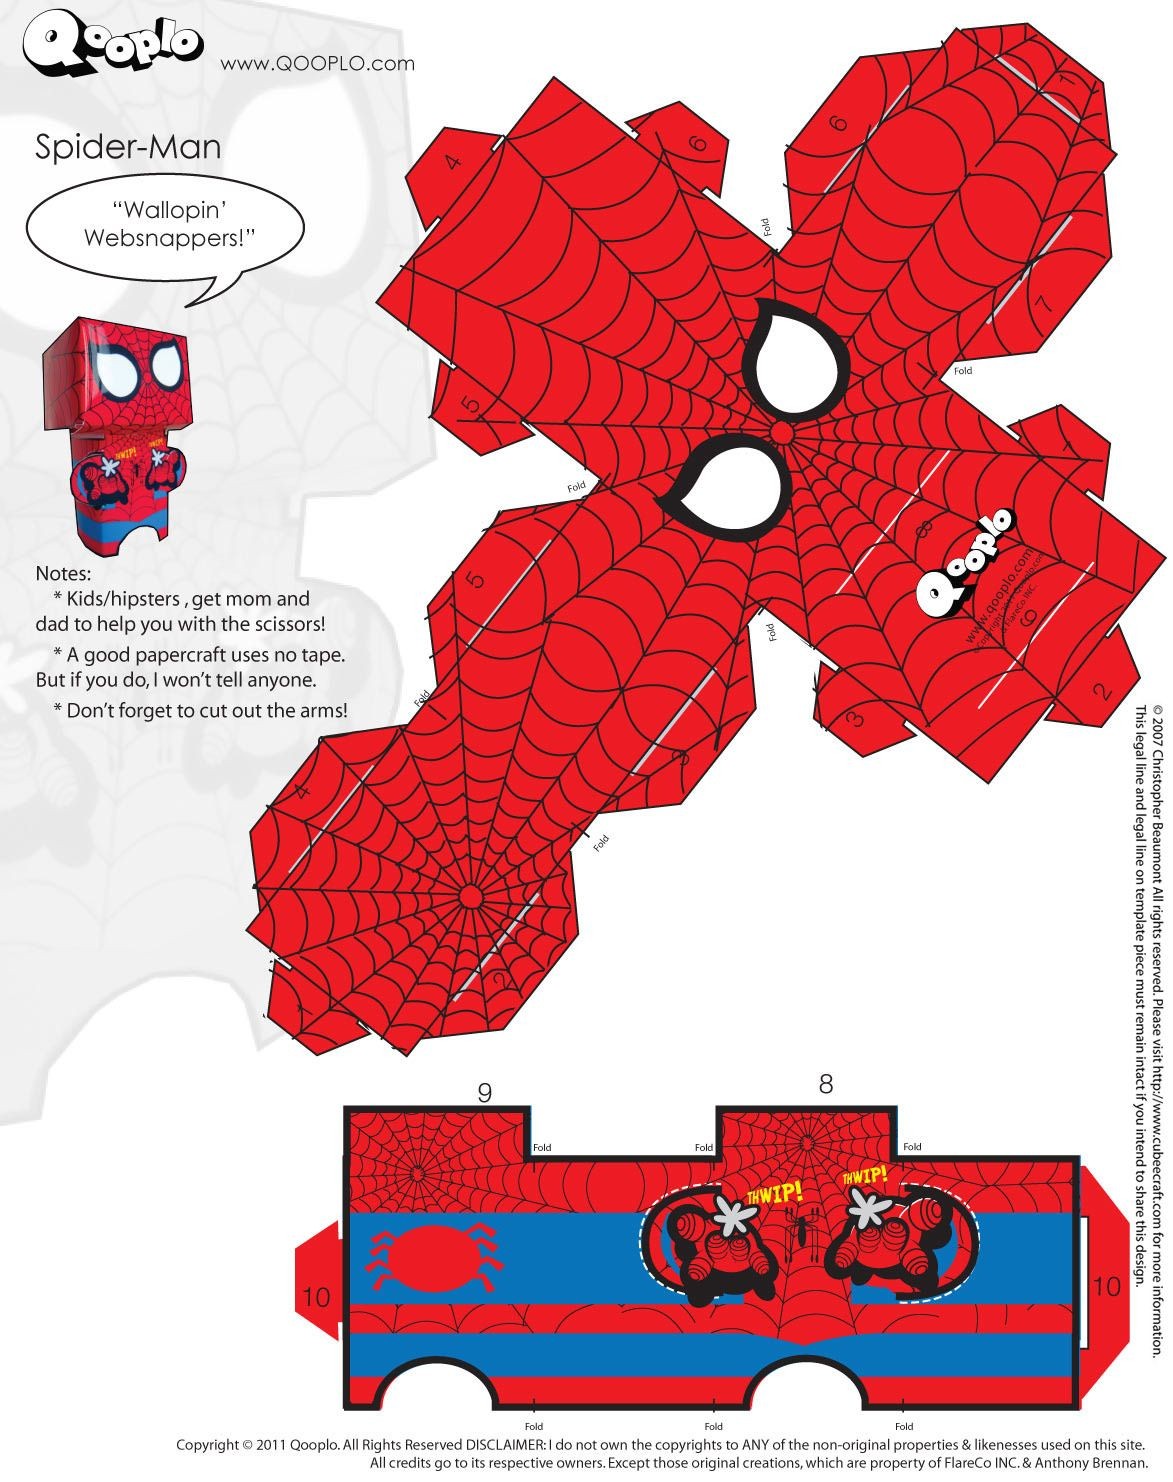 Papercraft Connection Spider Man Cubeecraft Cubeecraft Pinterest